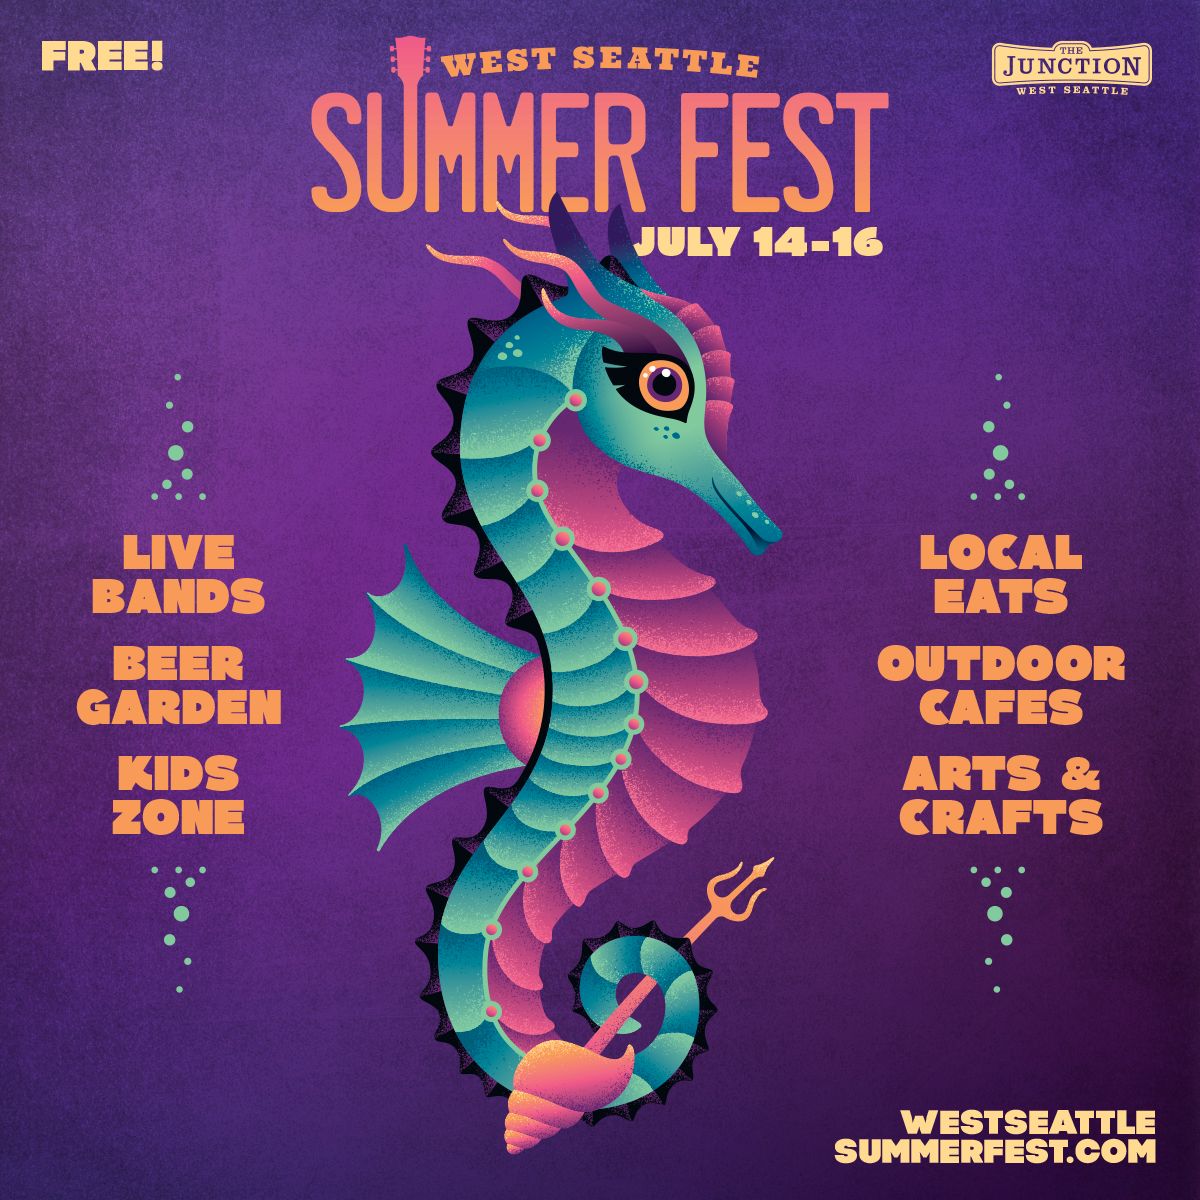 West Seattle Summerfest arrives this weekend offering fun, food